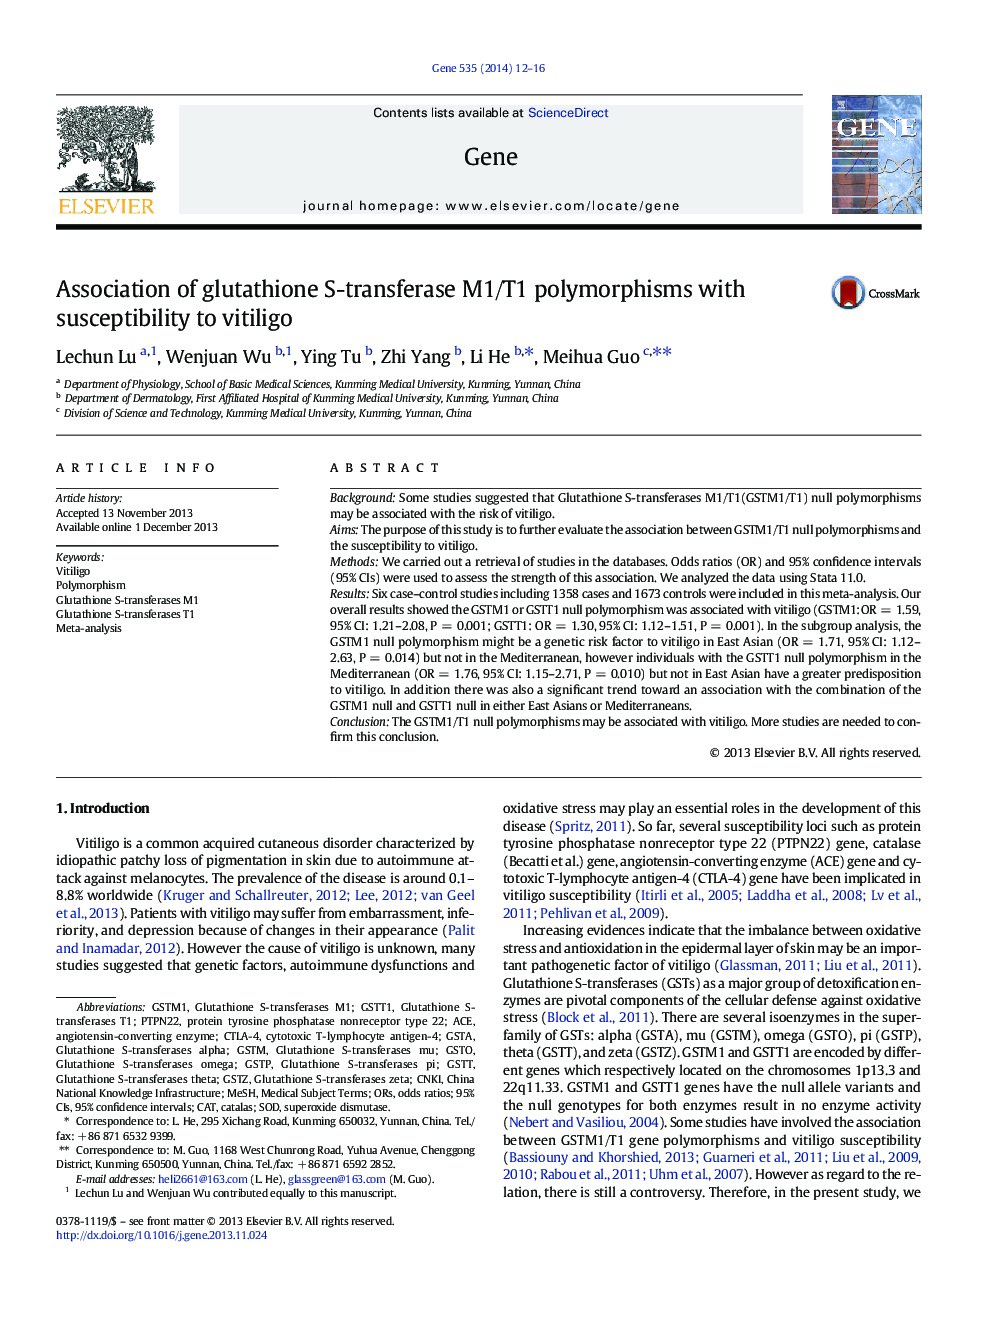 Association of glutathione S-transferase M1/T1 polymorphisms with susceptibility to vitiligo